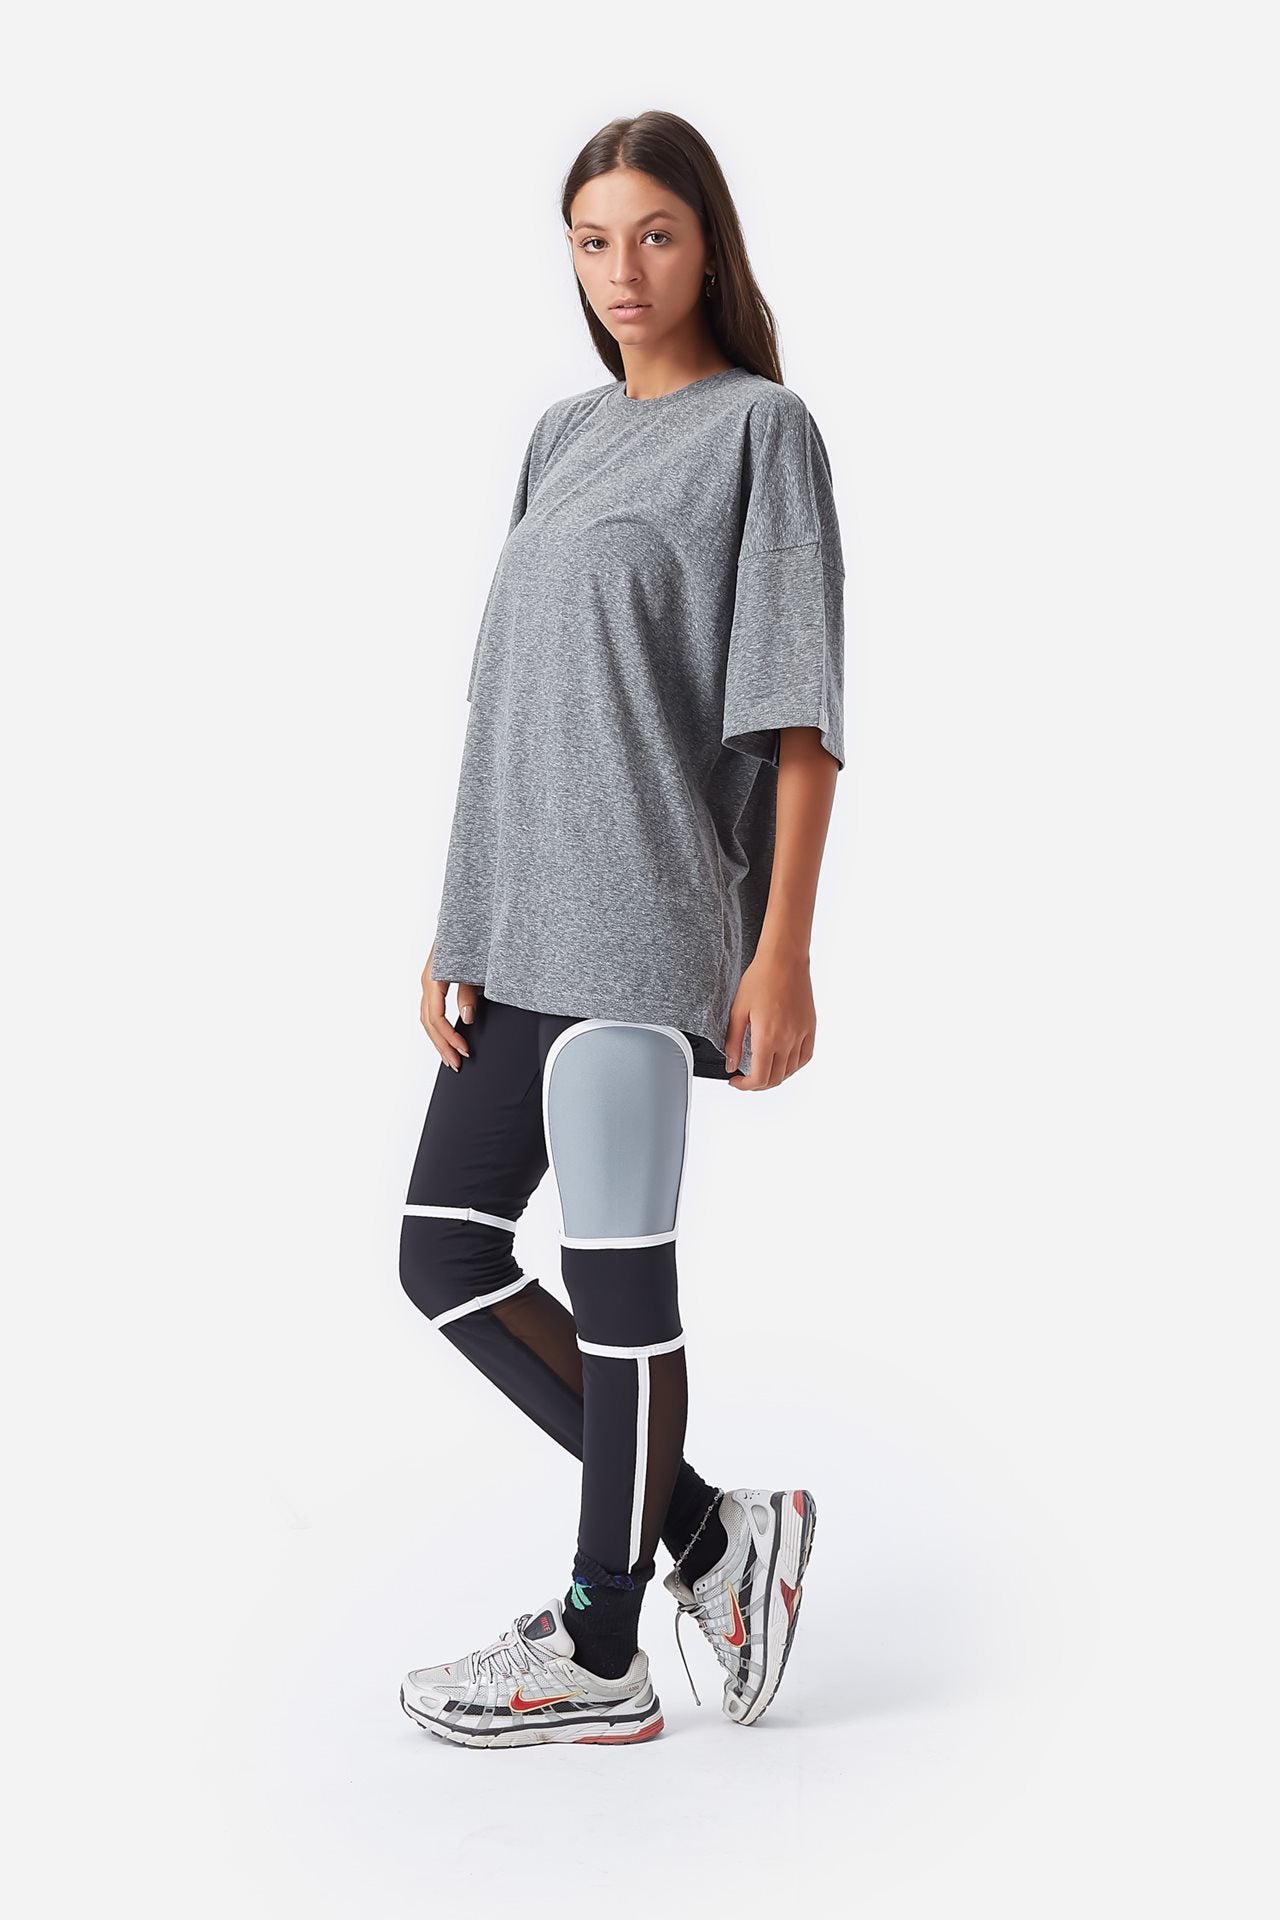 Active Metallic Leggings Women Activewear Boddiction 